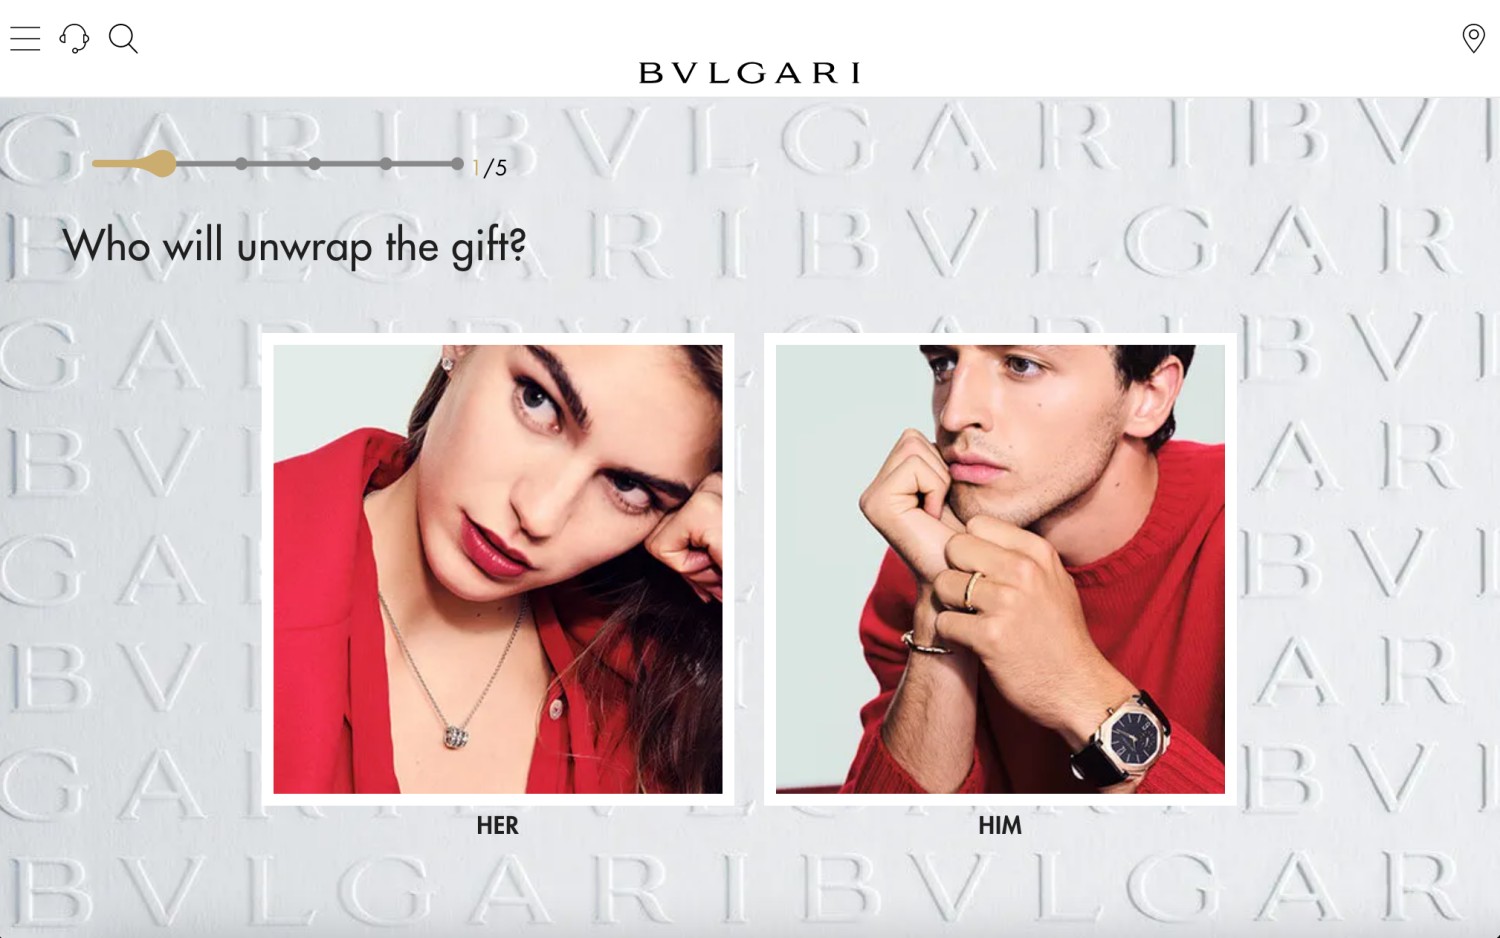 bulgari online gift shopping experiences